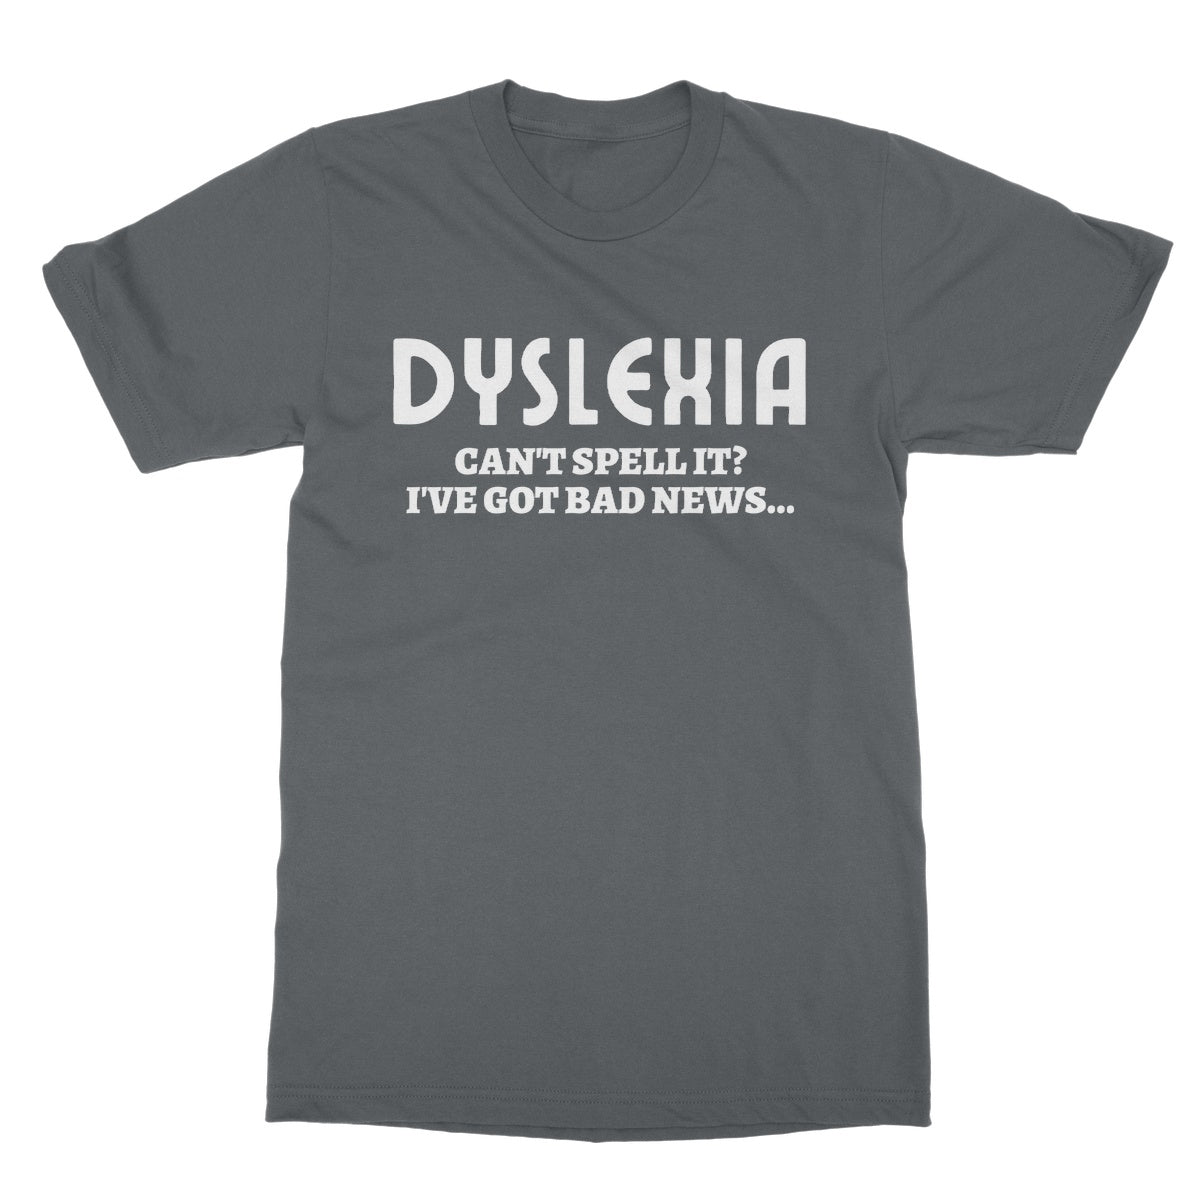 dyslexia t shirt grey